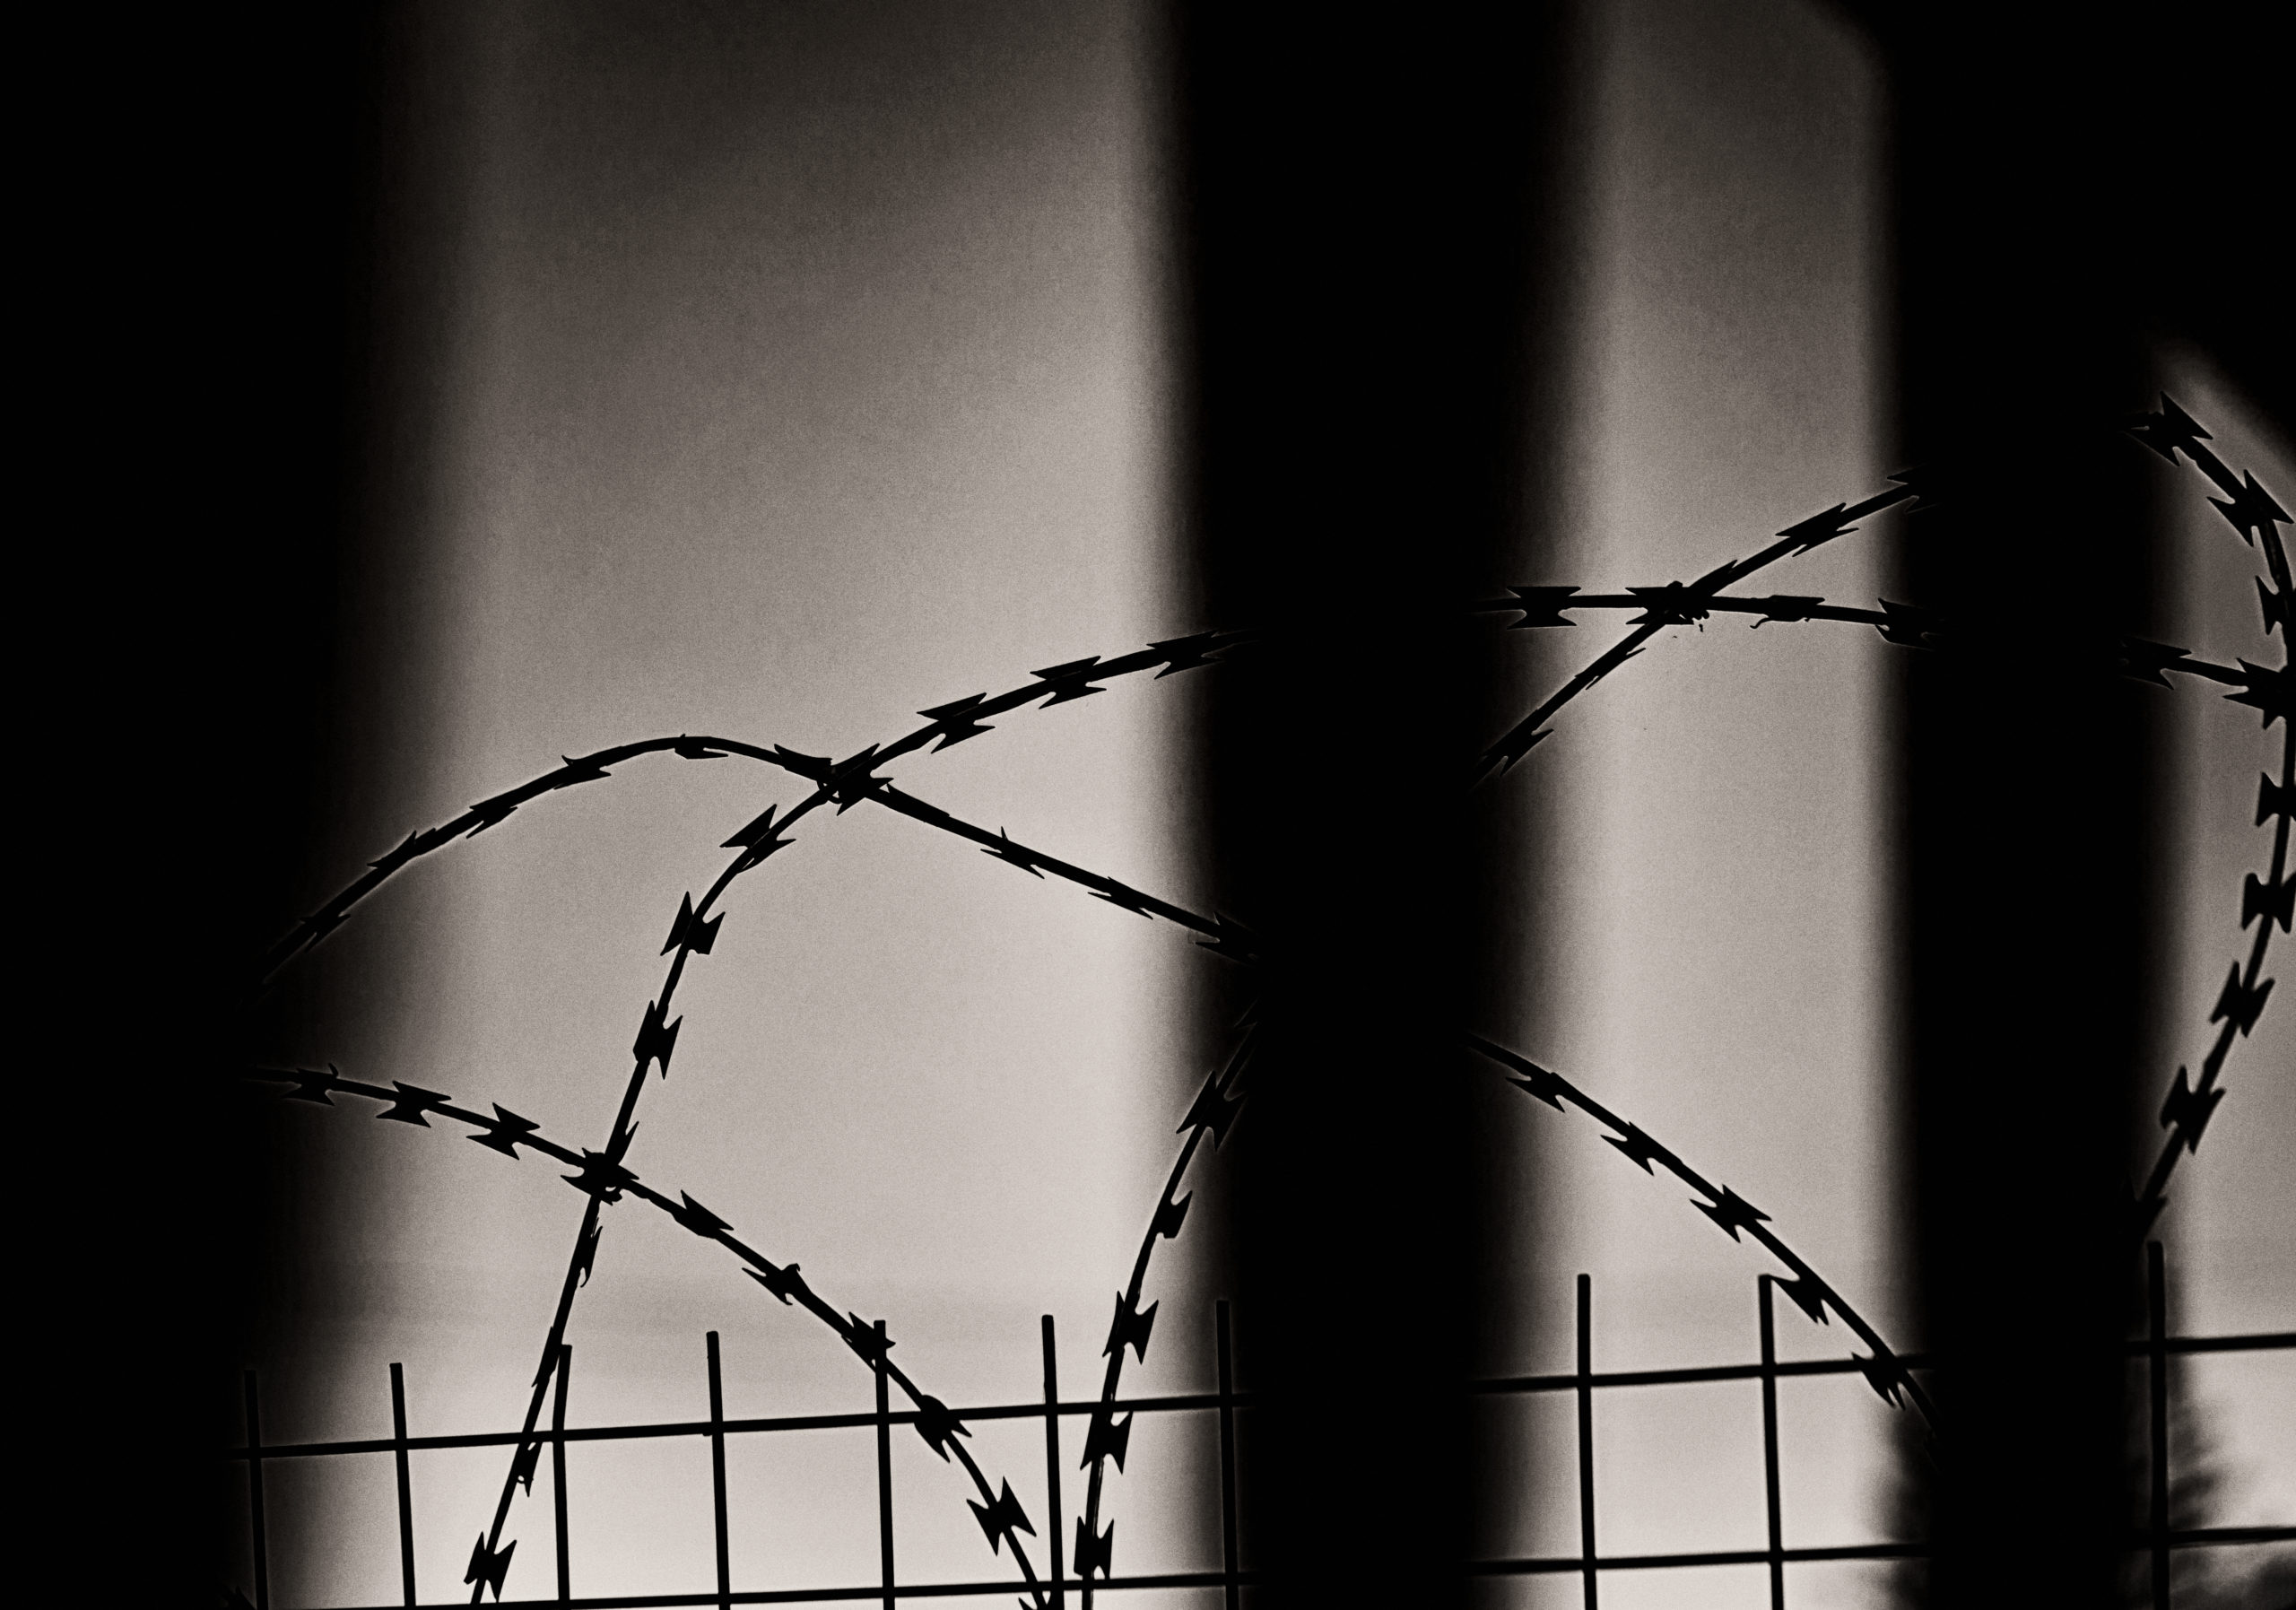 Sharp barbed razor wire fence seen through prison bars